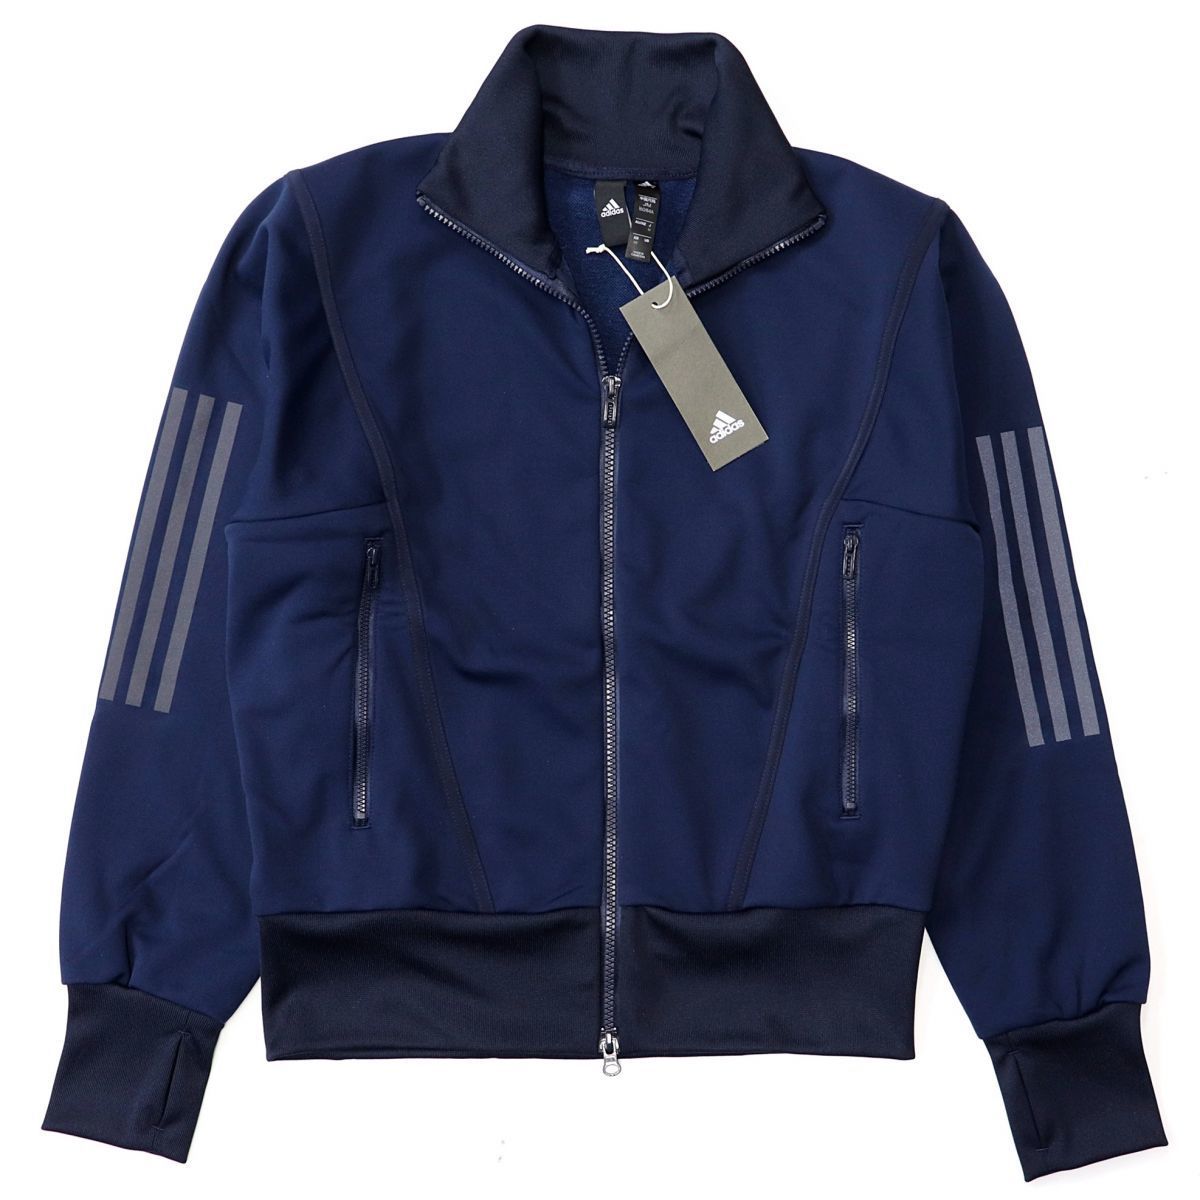  new goods unused Adidas adidas lady's [AEROREADY] sport wear jersey jacket training M size 